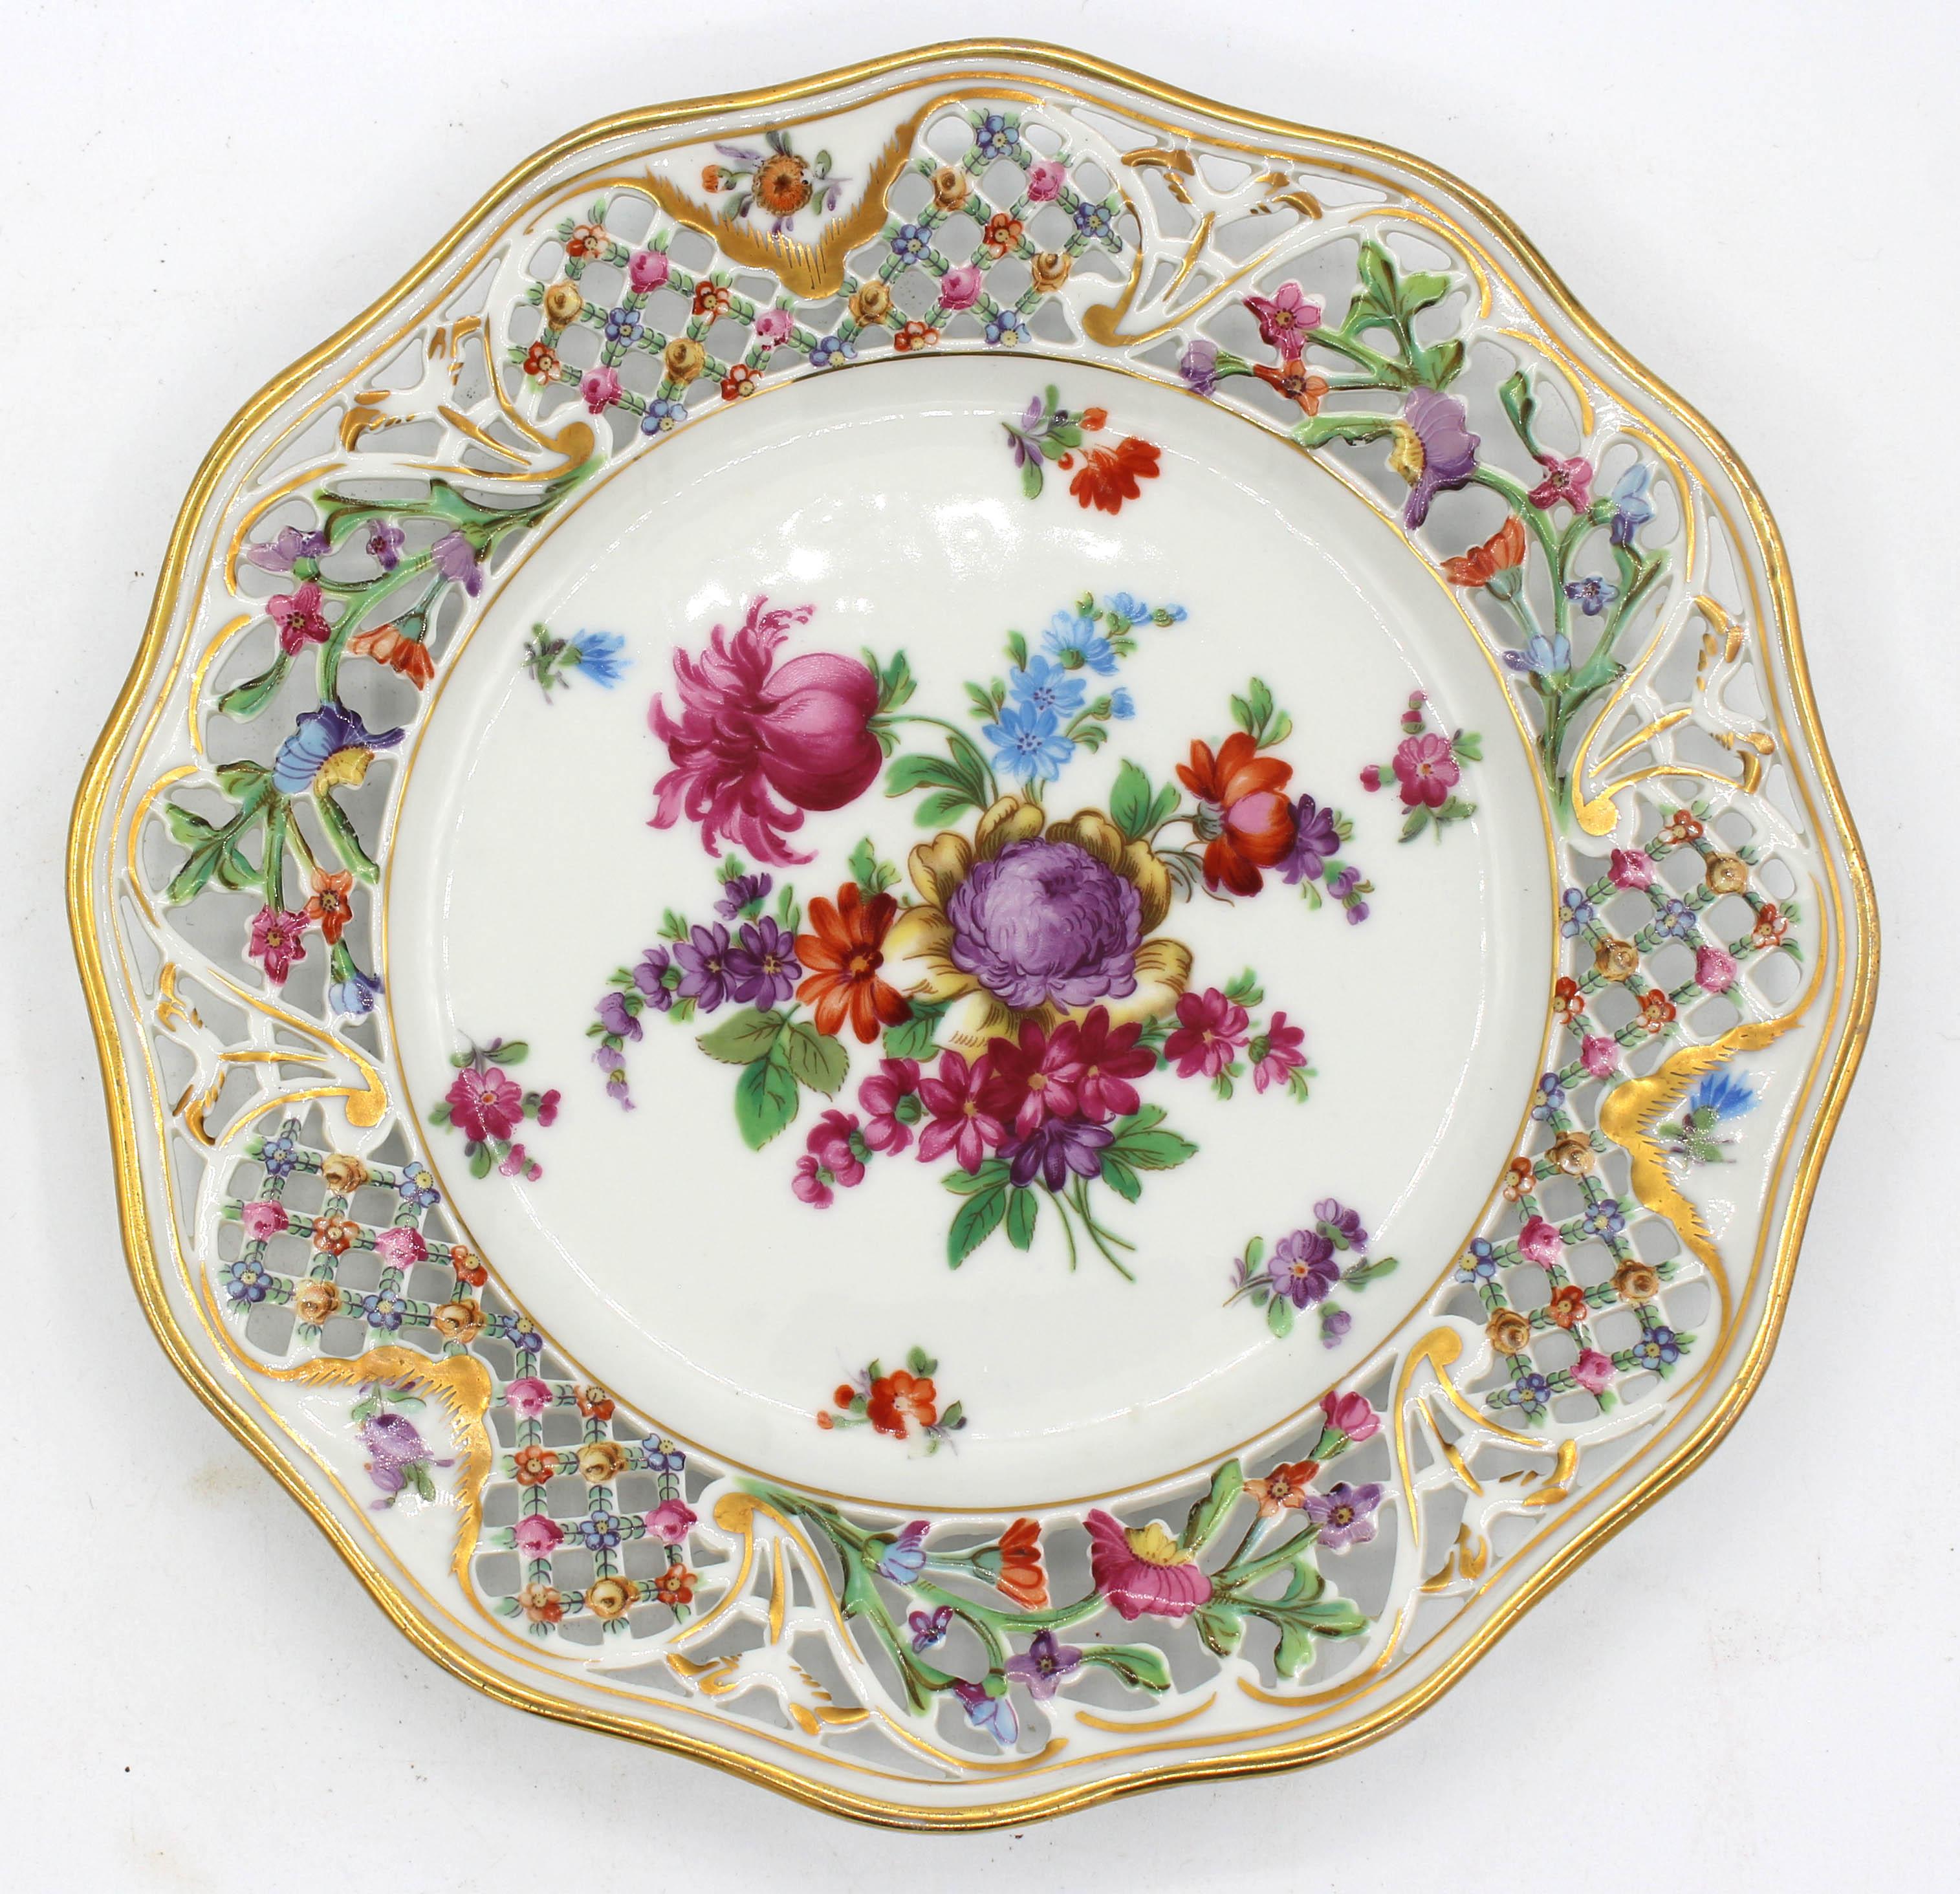 1932-1944 Set of 8 Dessert Plates by Schumann, Dresden & Bavaria periods For Sale 2